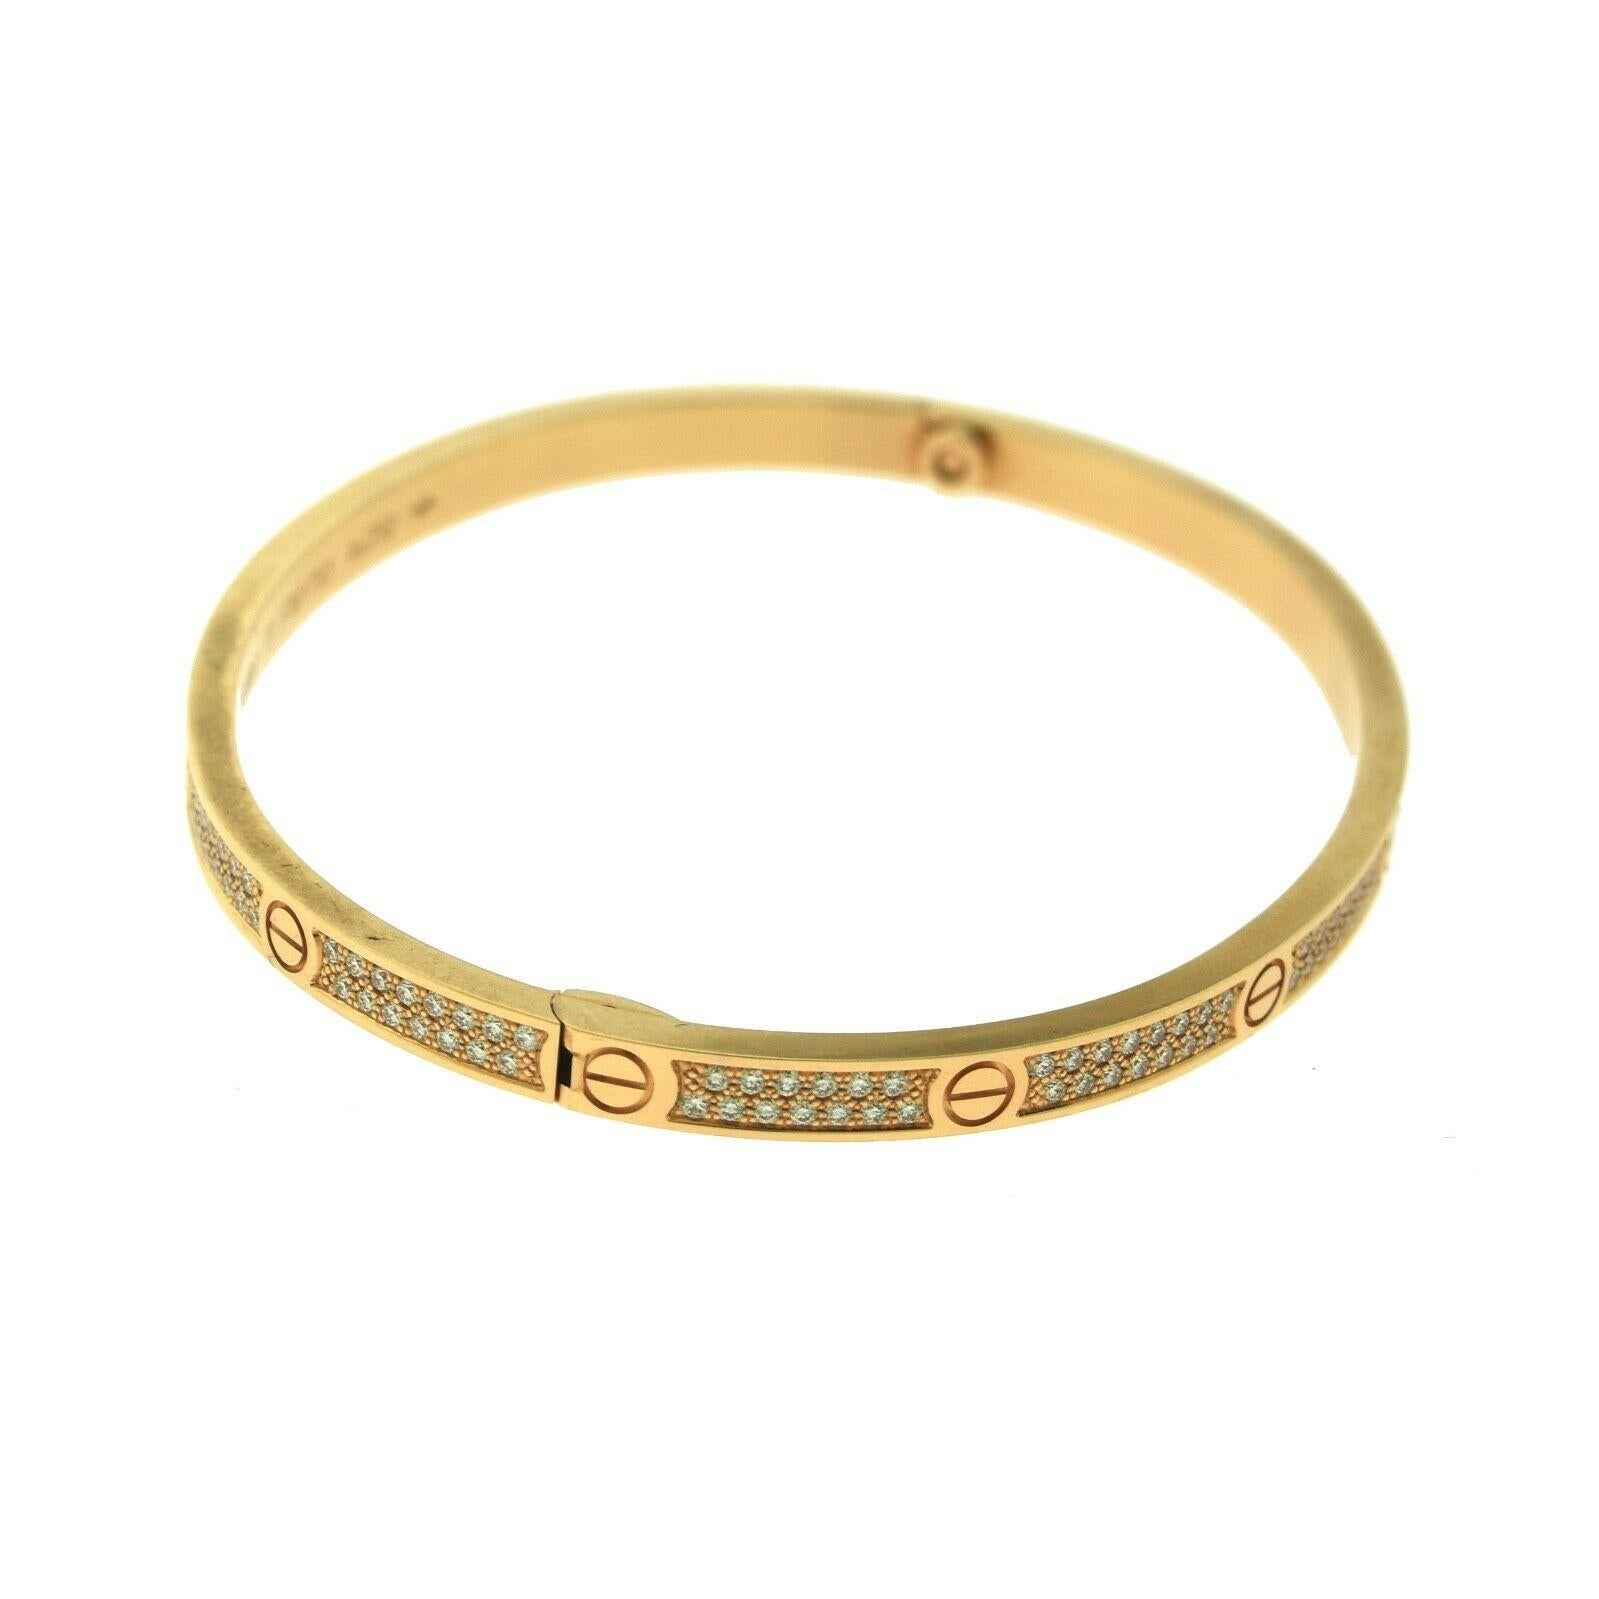 Designer: Cartier
Collection: LOVE
Style: THIN / Small Bangle/Bracelet
Metal: Rose  Gold
Metal Purity: 18k
Stones: 177 Round Brilliant Diamonds = 0.95 ct
Bracelet Size: 17 = 17 cm 
Hallmarks: Cartier, Serial No., Au750 17
Includes:  Cartier Box ,